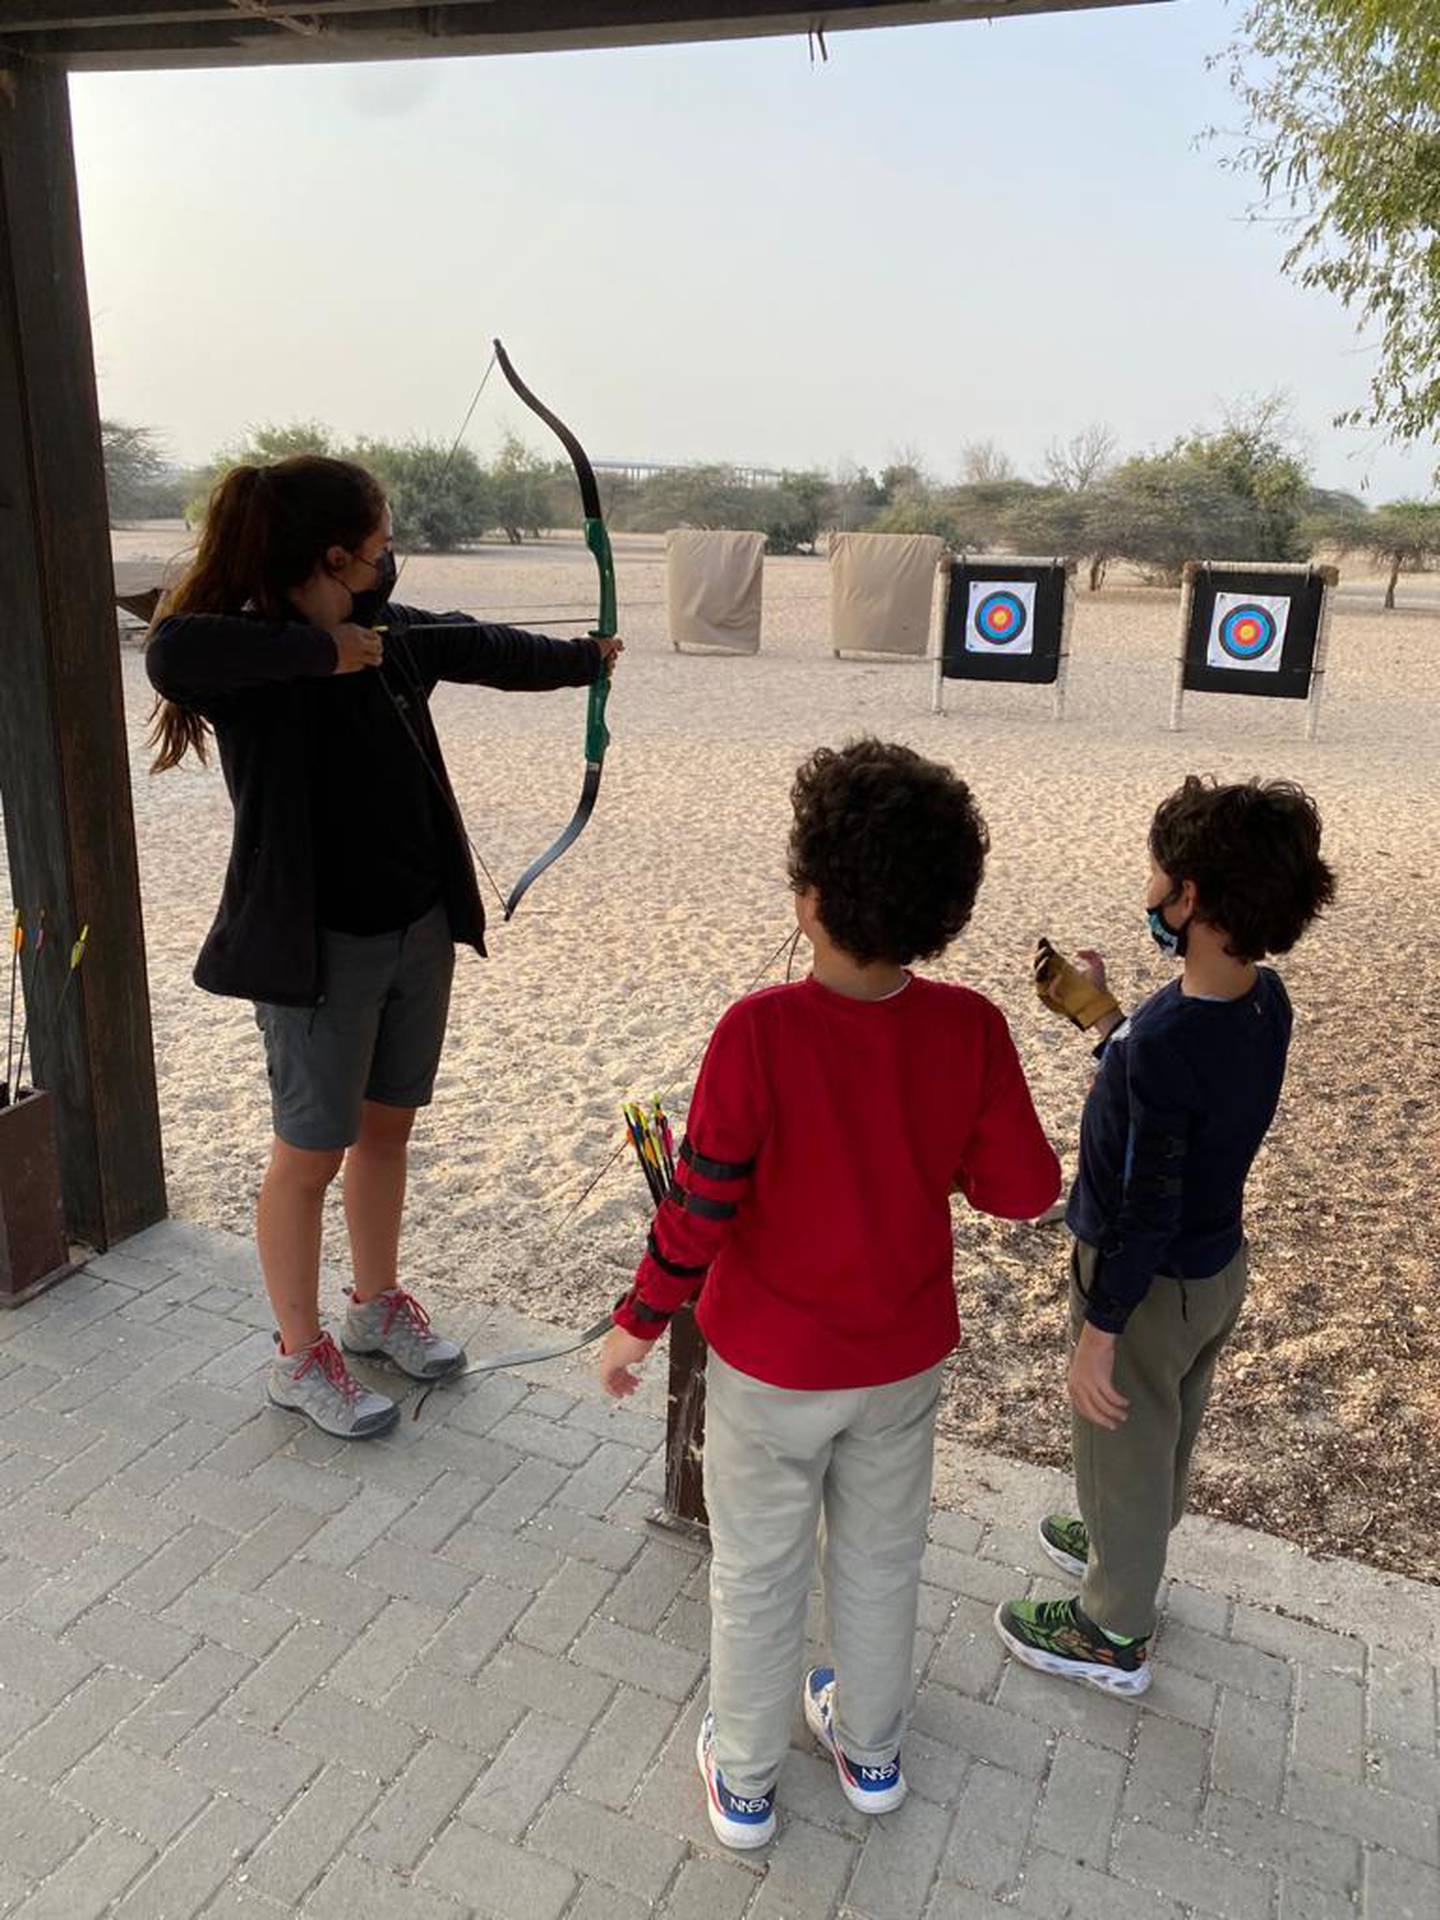 Samia Badih partakes in archery on Sir Bani Yas Island with her children. Courtesy Samia Badih